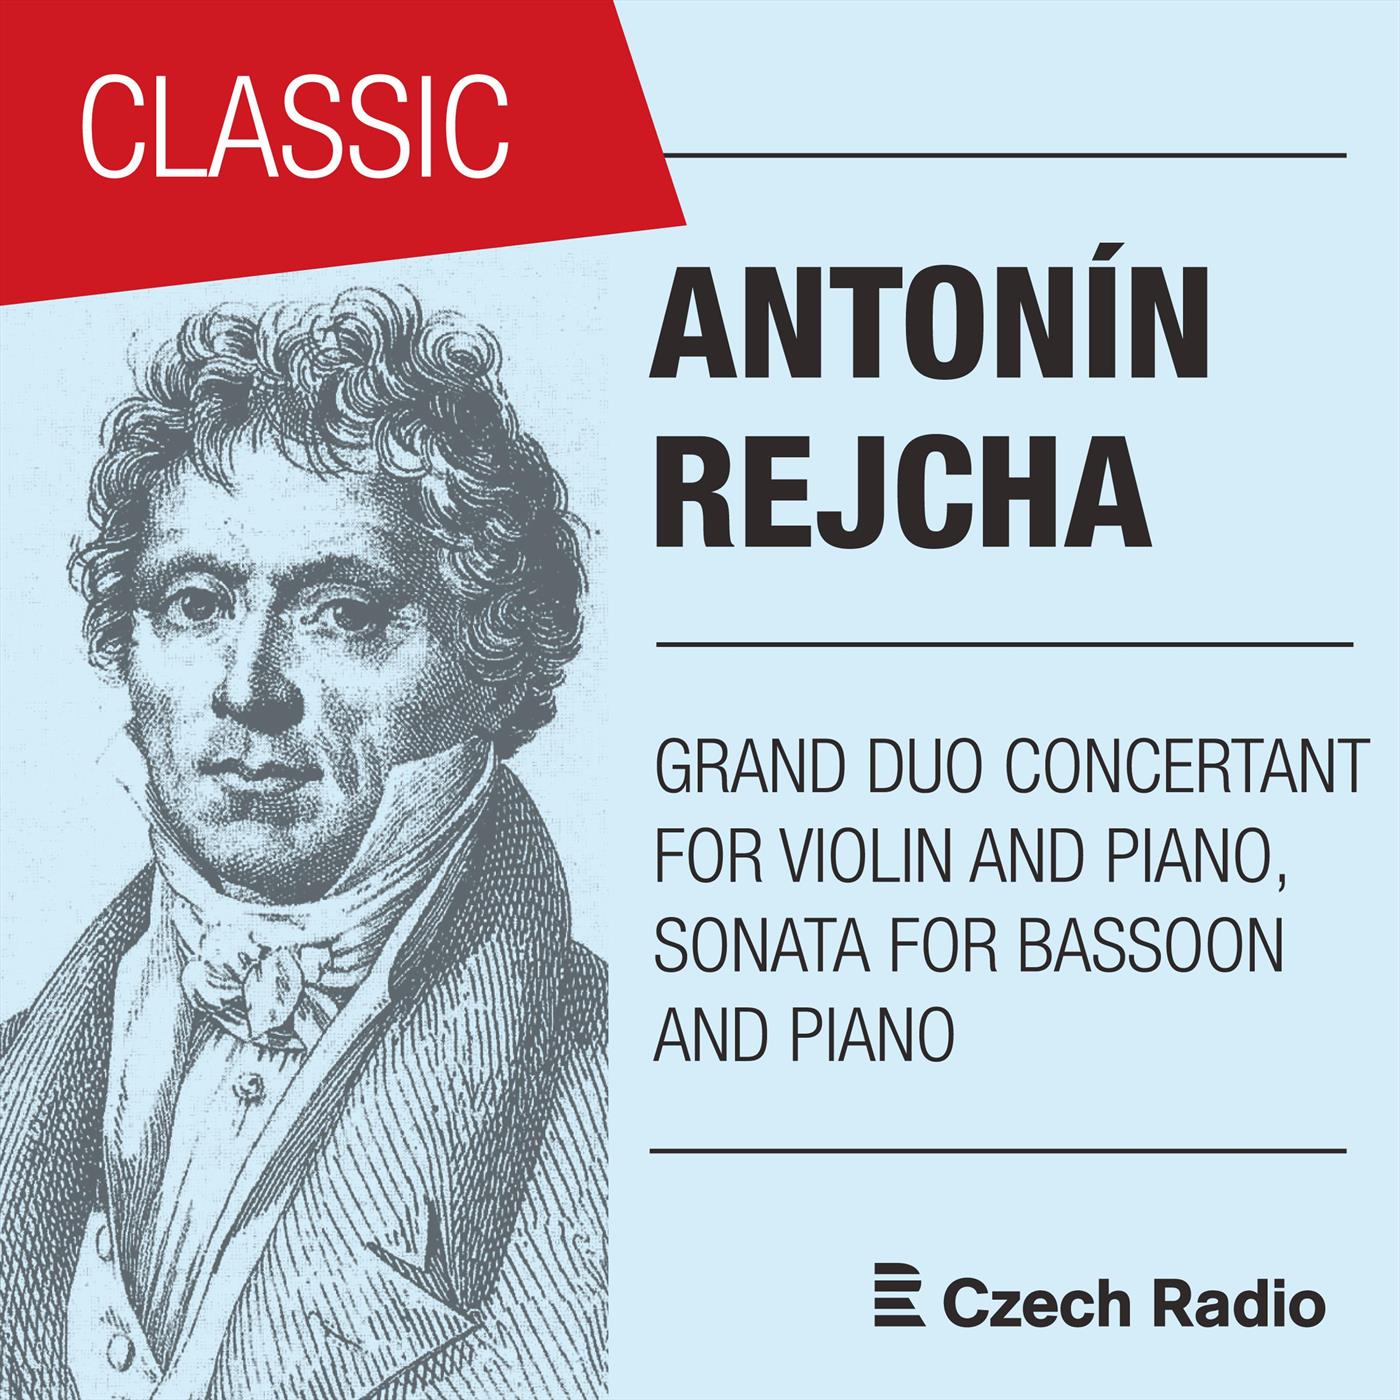 Antoni n Rejcha Reicha: Grand Duo Concertant for Violin and Piano  Sonata for Bassoon and Piano